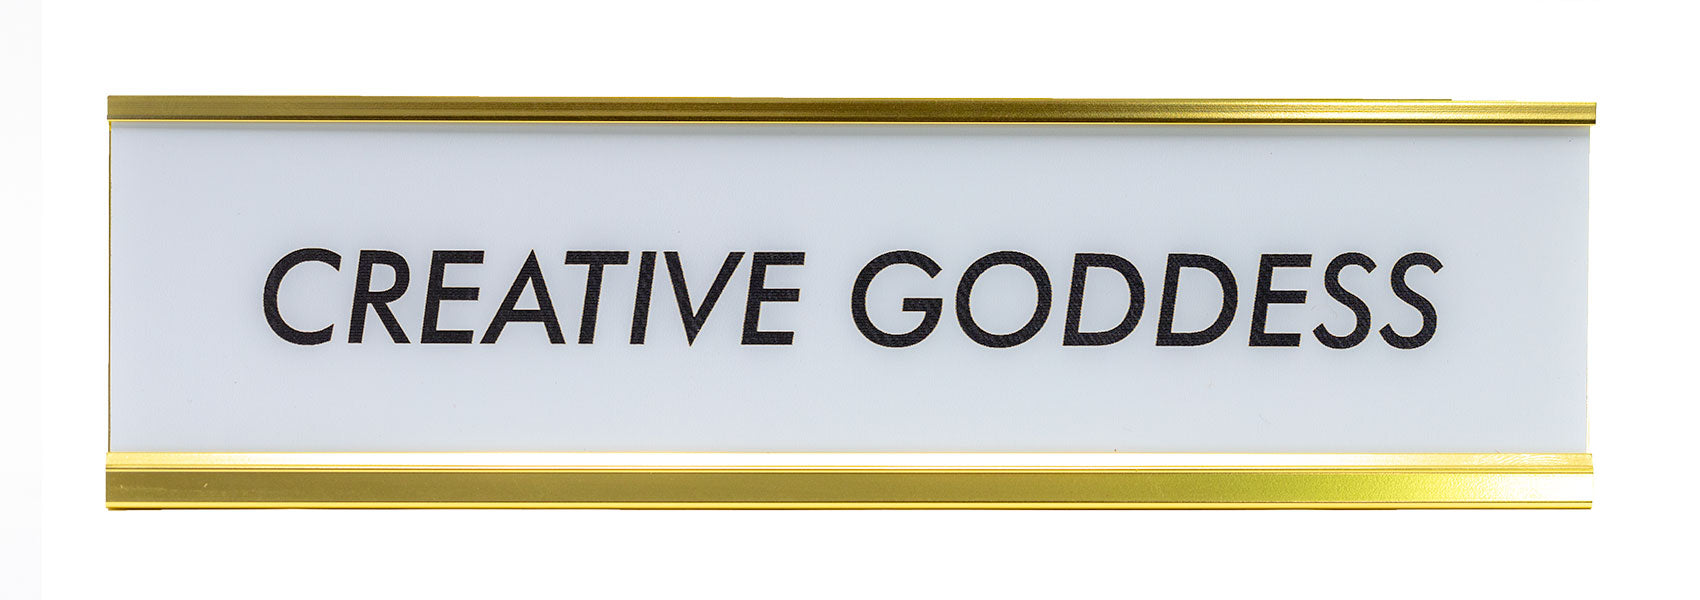 Creative Goddess Nameplate Desk Sign